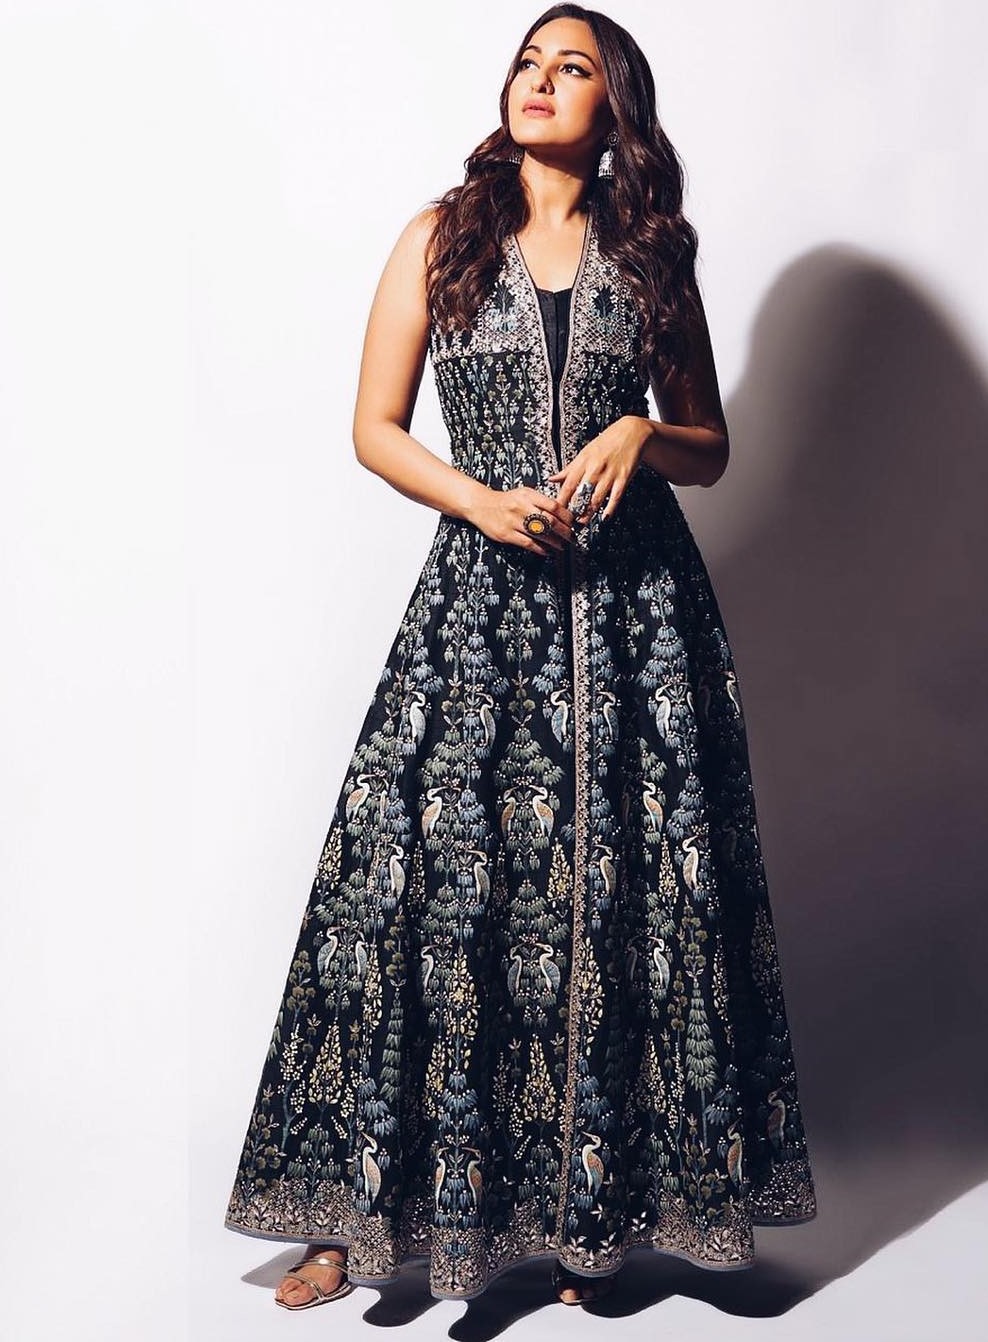 Designer Anarkali Suit In Black Sonakshi Sinha's Dresses, Sarees, Lehenga, Jewellery & More